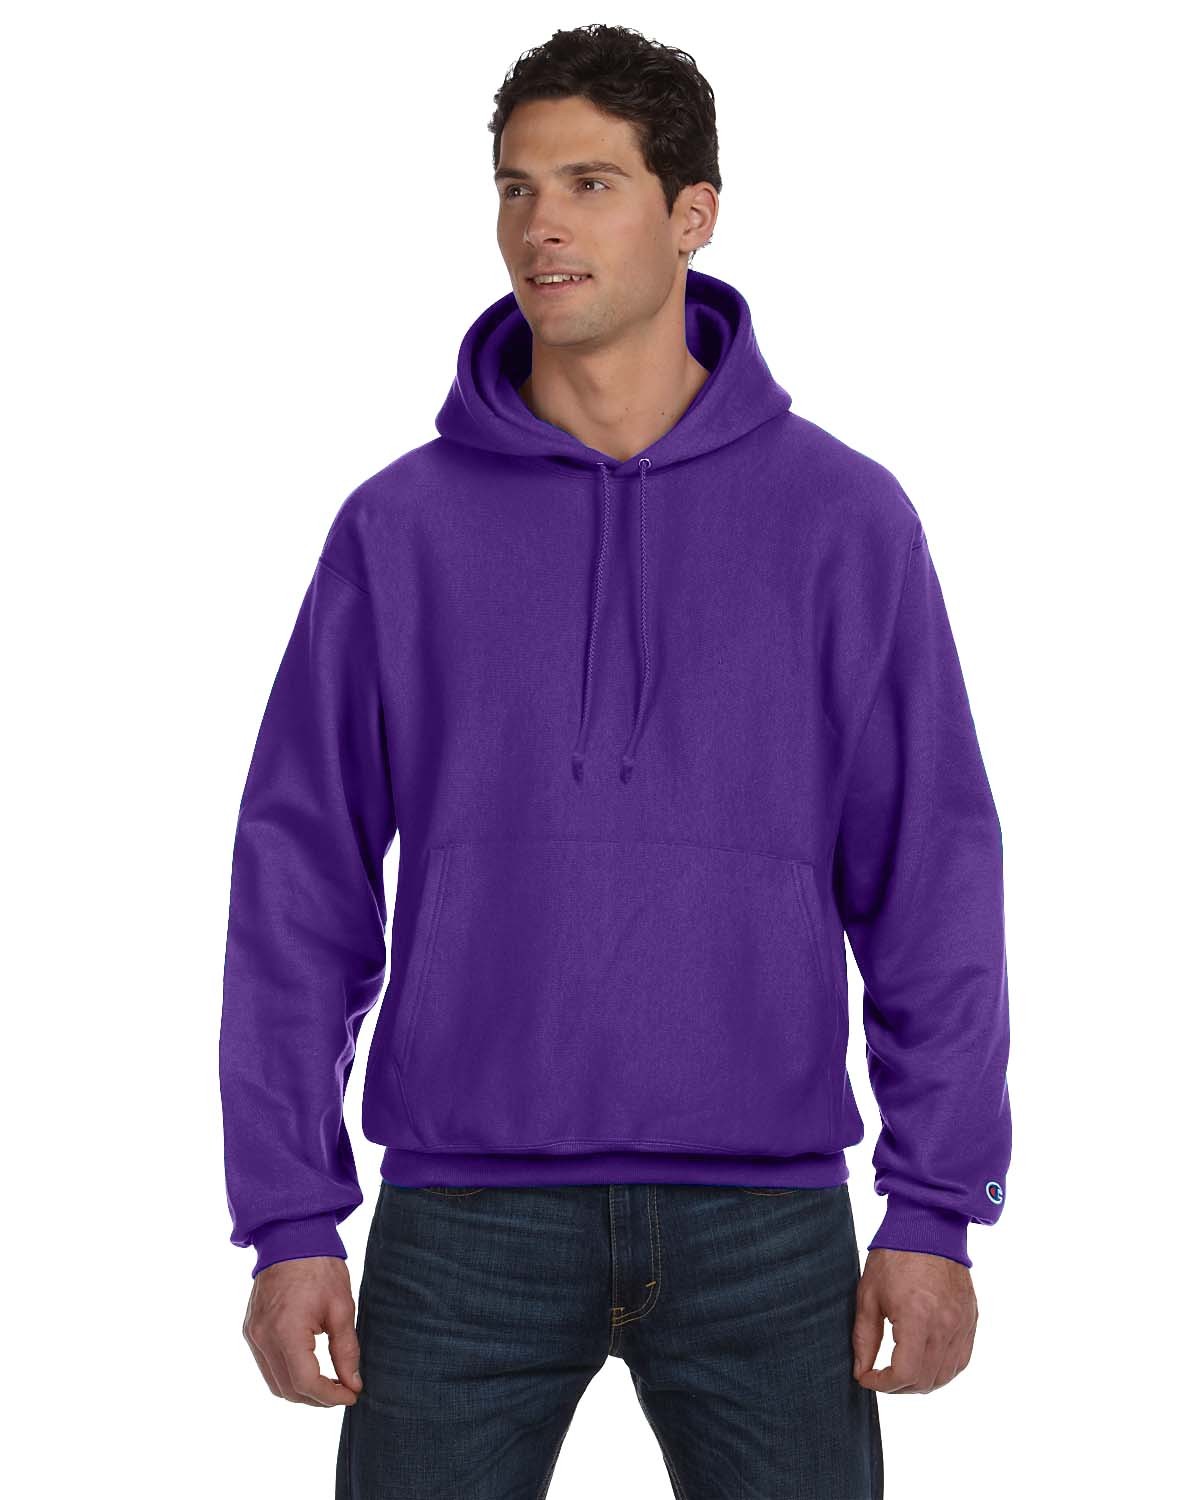 light purple champion sweater